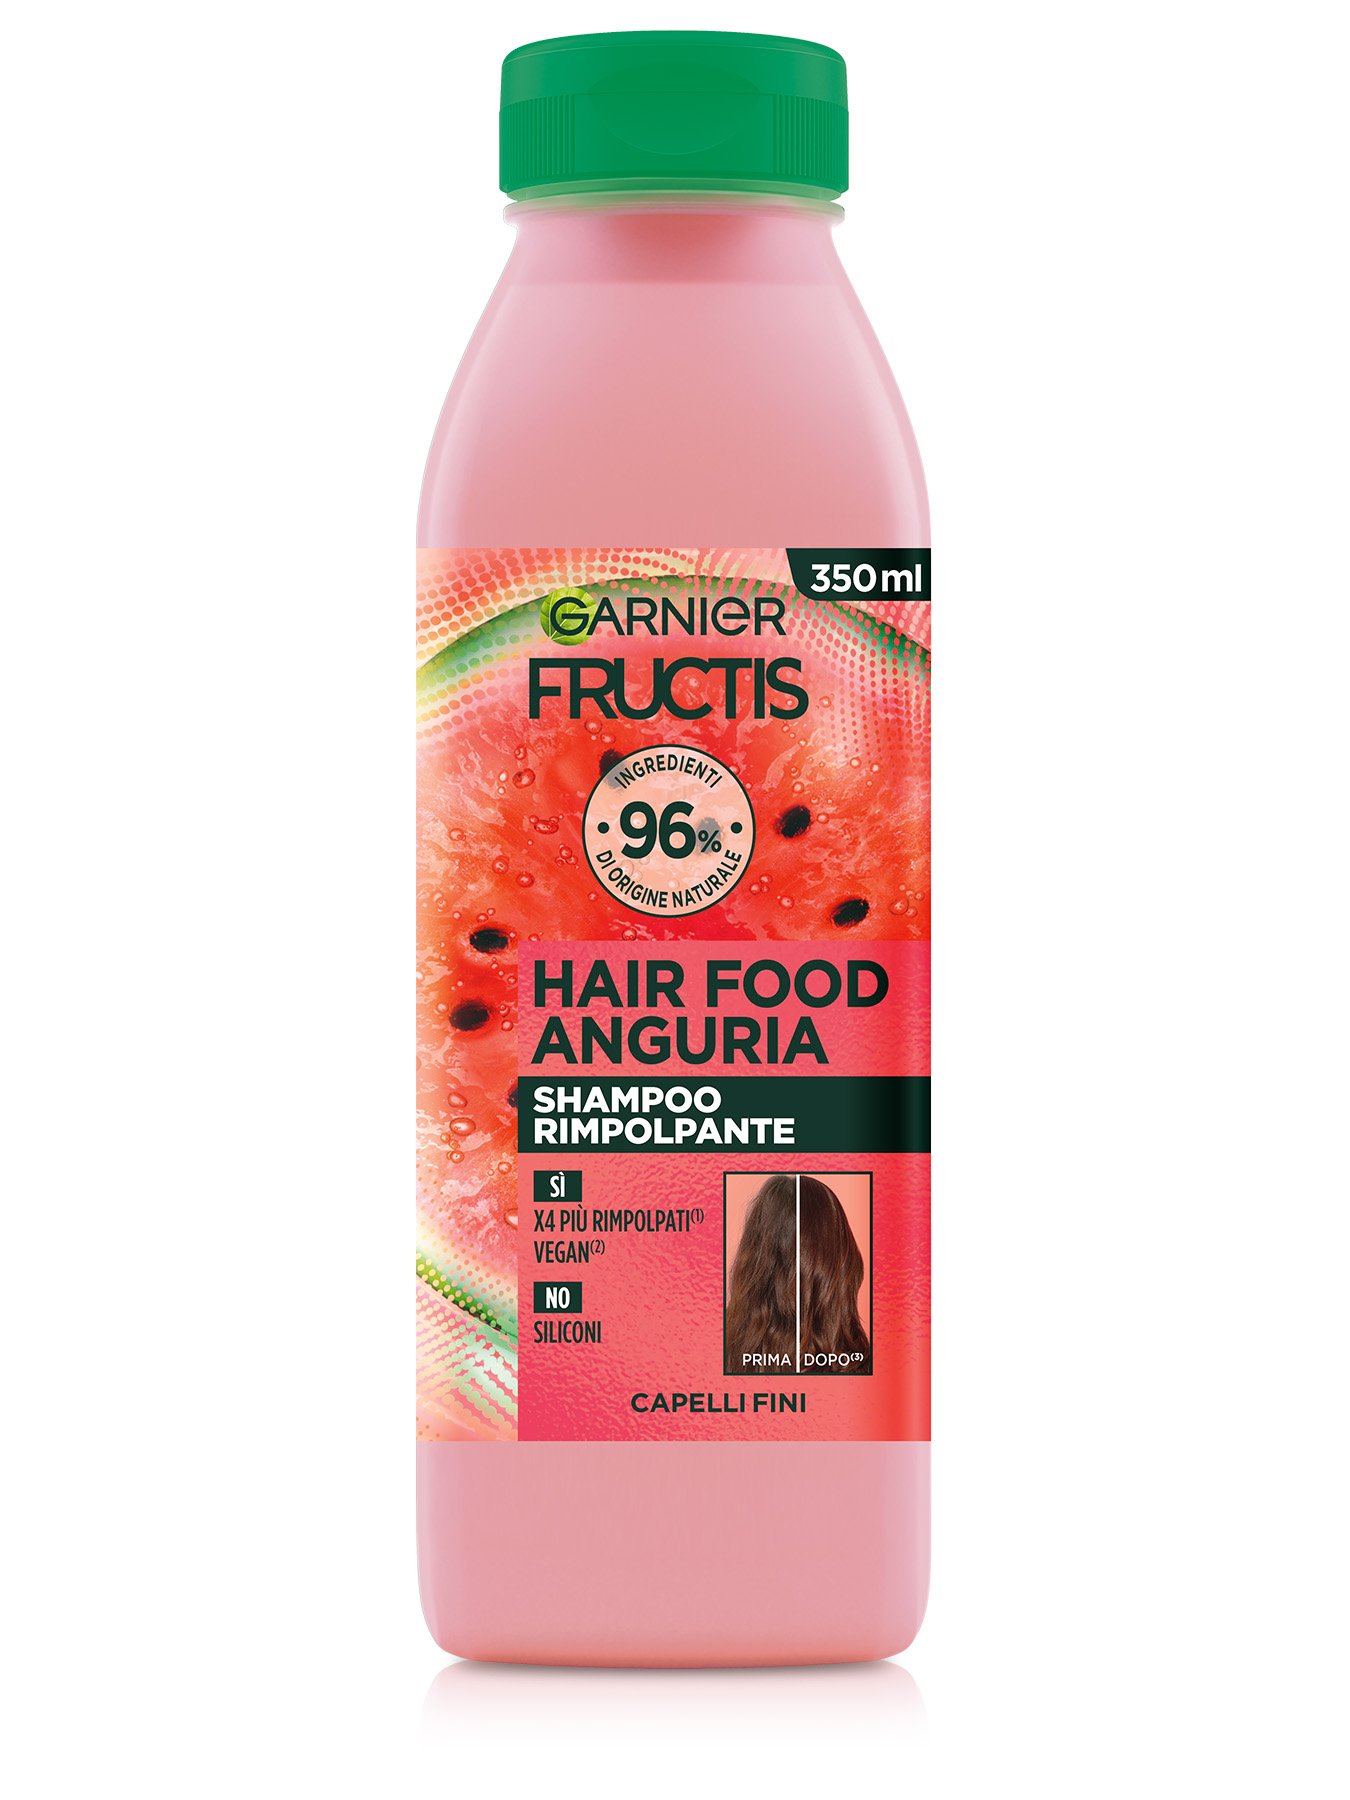 Fructis Hair Food Anguria Shampoo